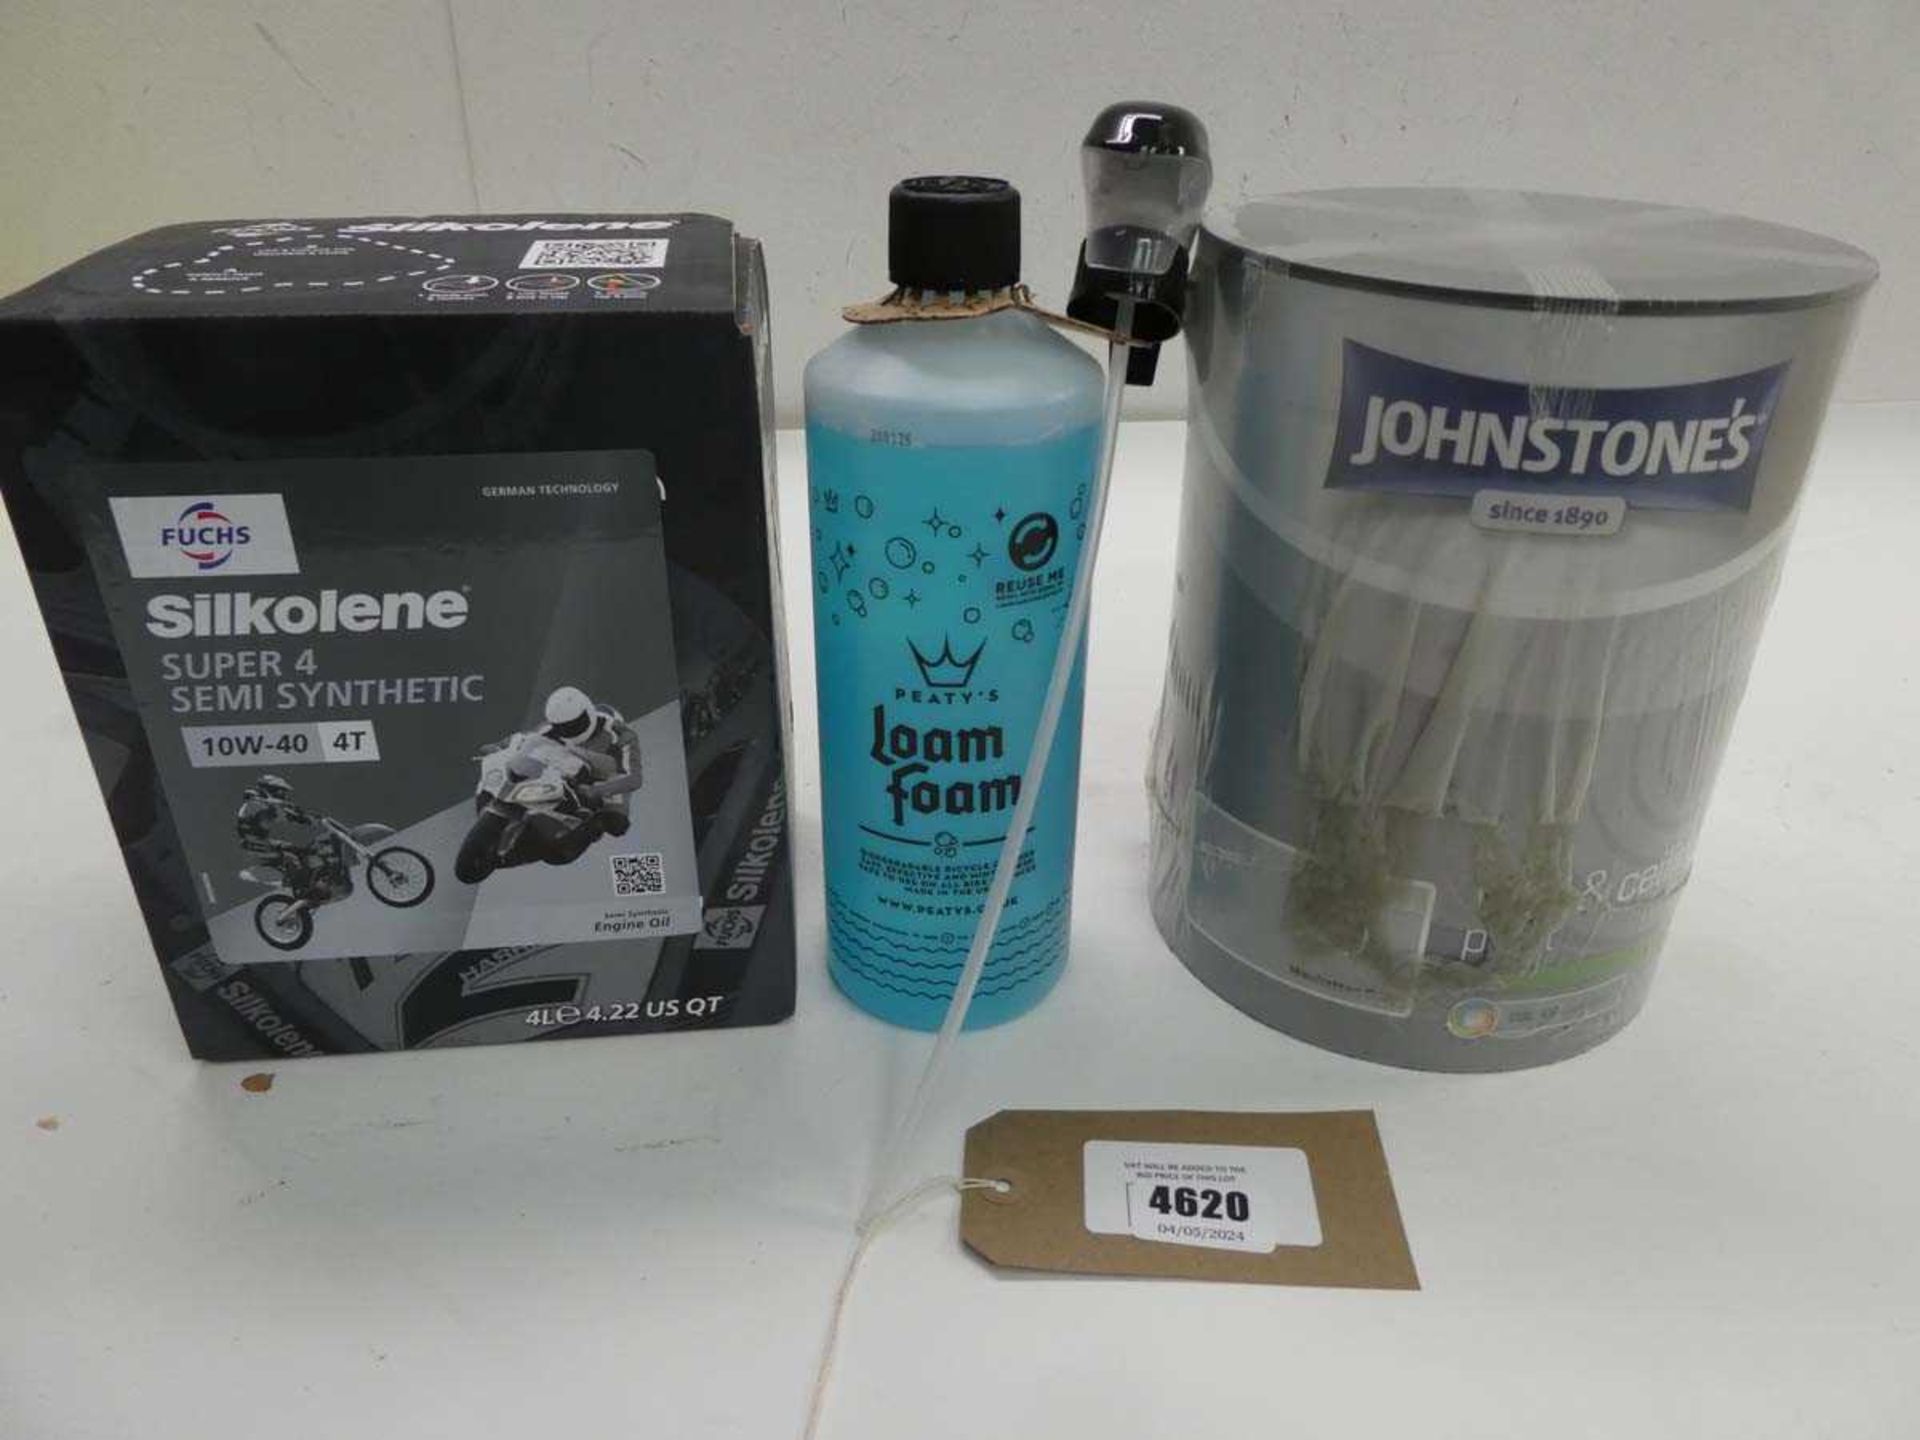 +VAT Silkolene semi synthetic engine oil, Loam Foam and tin of Johnstones wall & ceiling paint